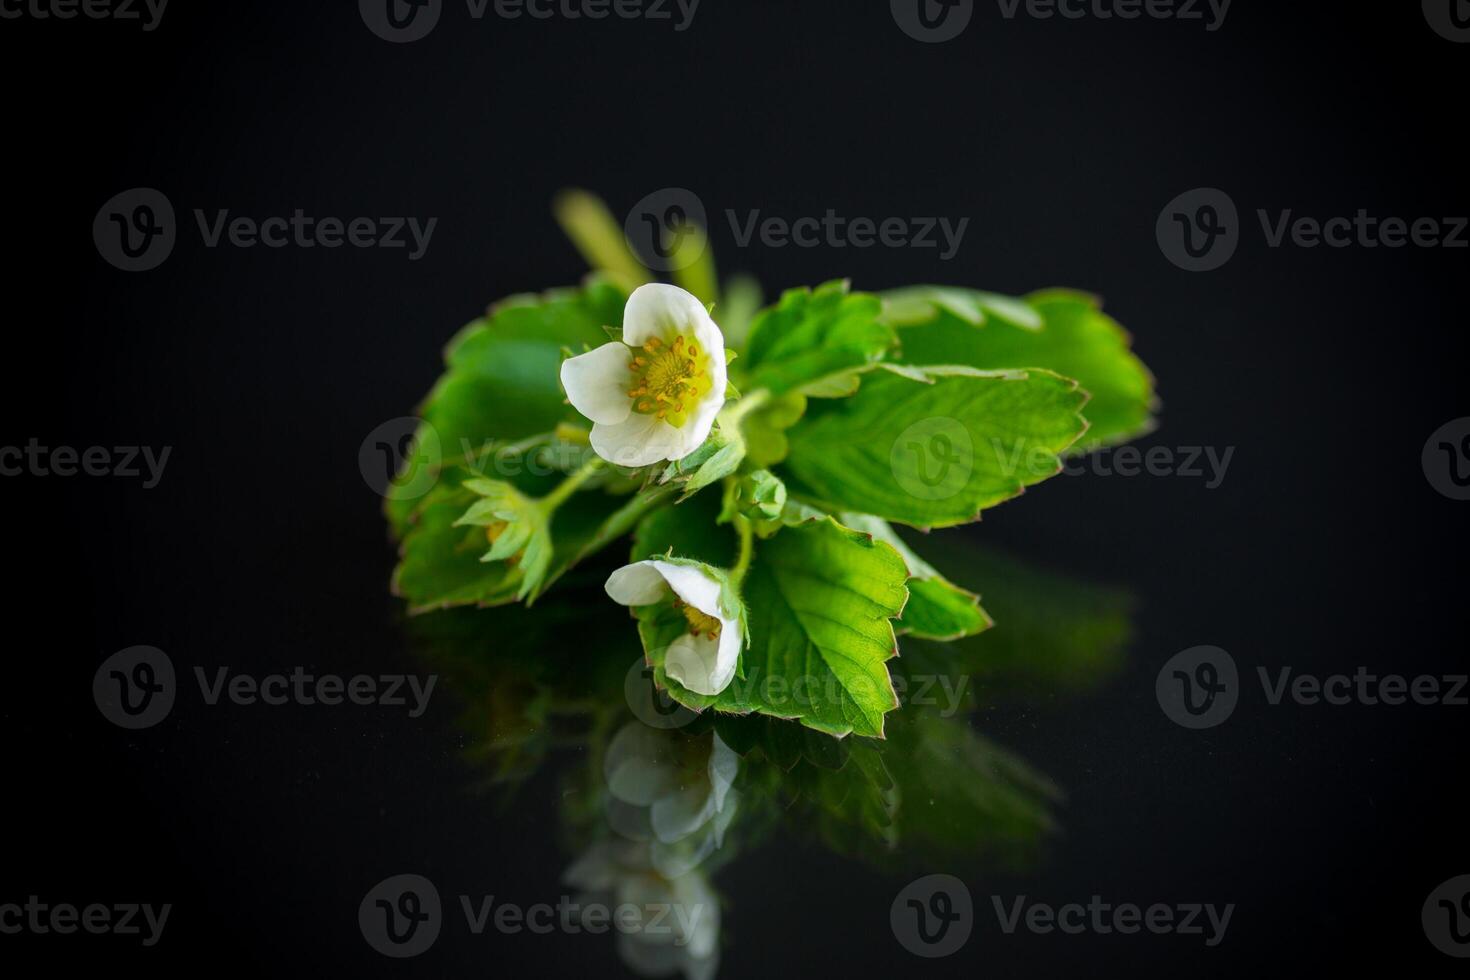 vit små jordgubb blomma med lövverk på svart bakgrund foto